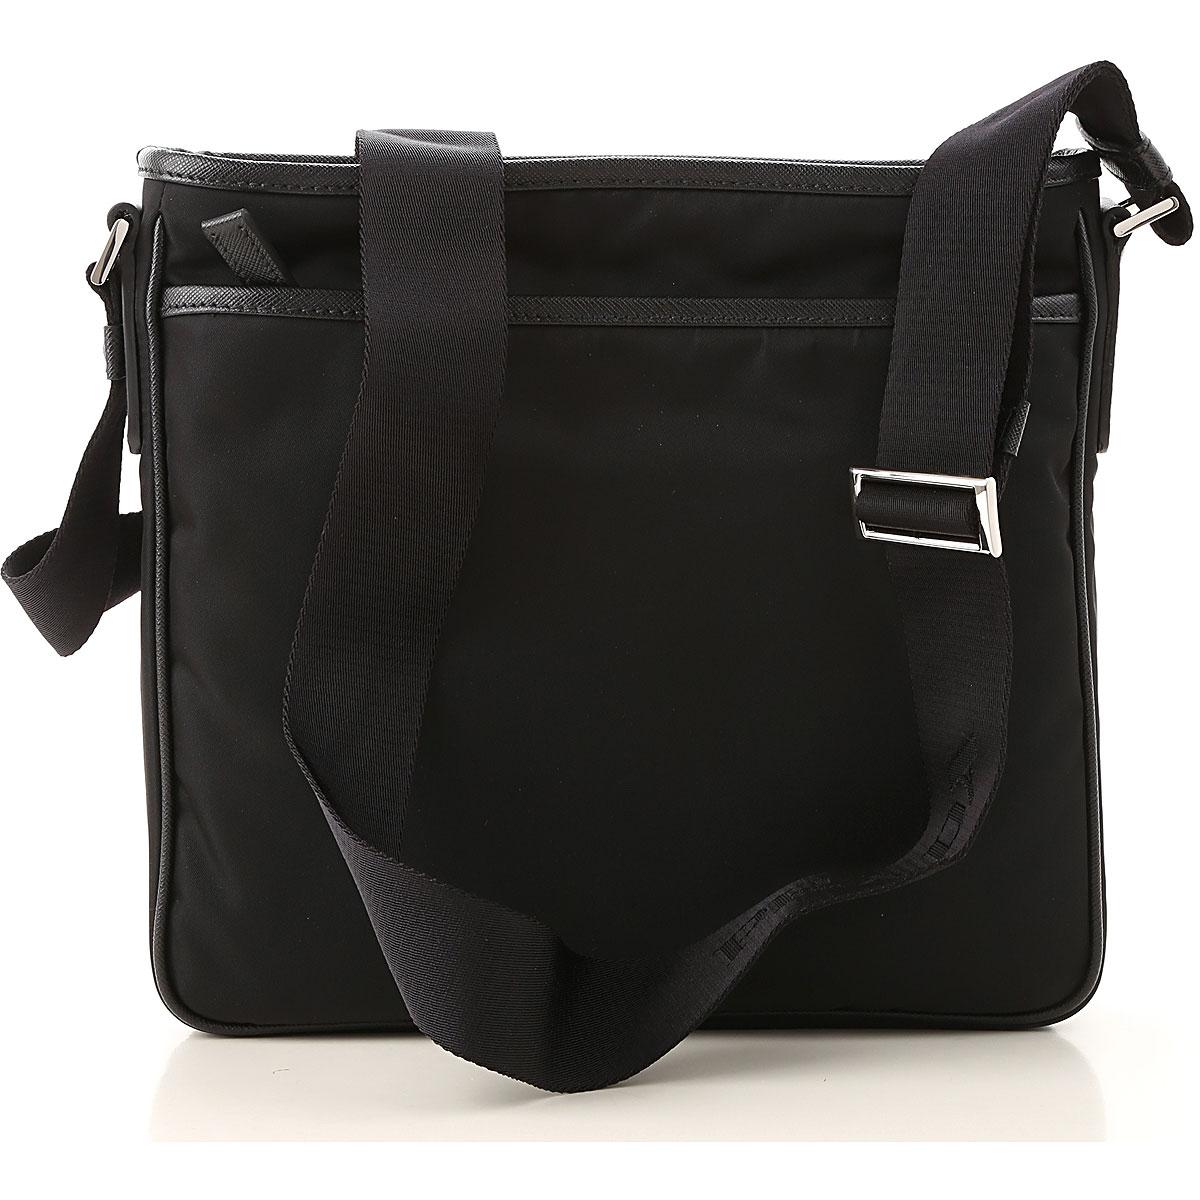 Prada Shoulder Bags in Black for Men - Lyst